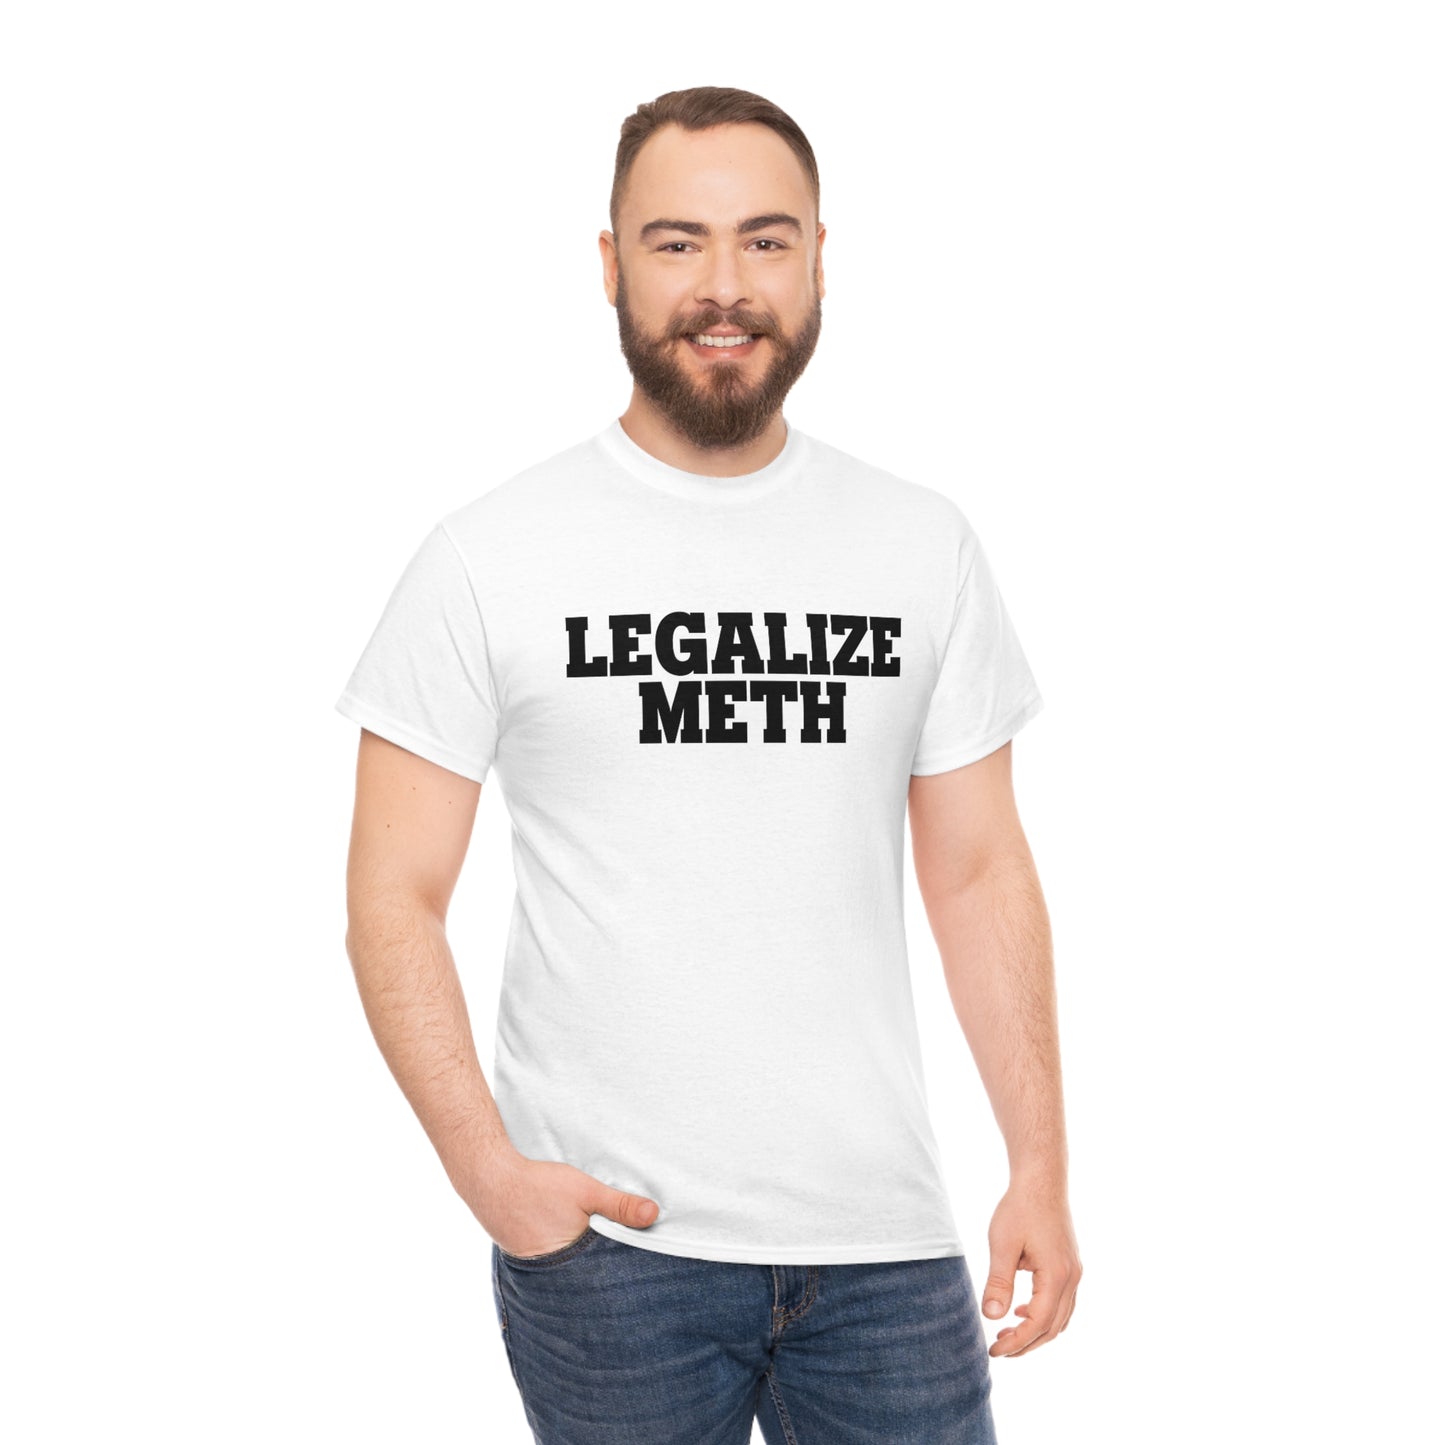 LEGALIZE METH T-SHIRT